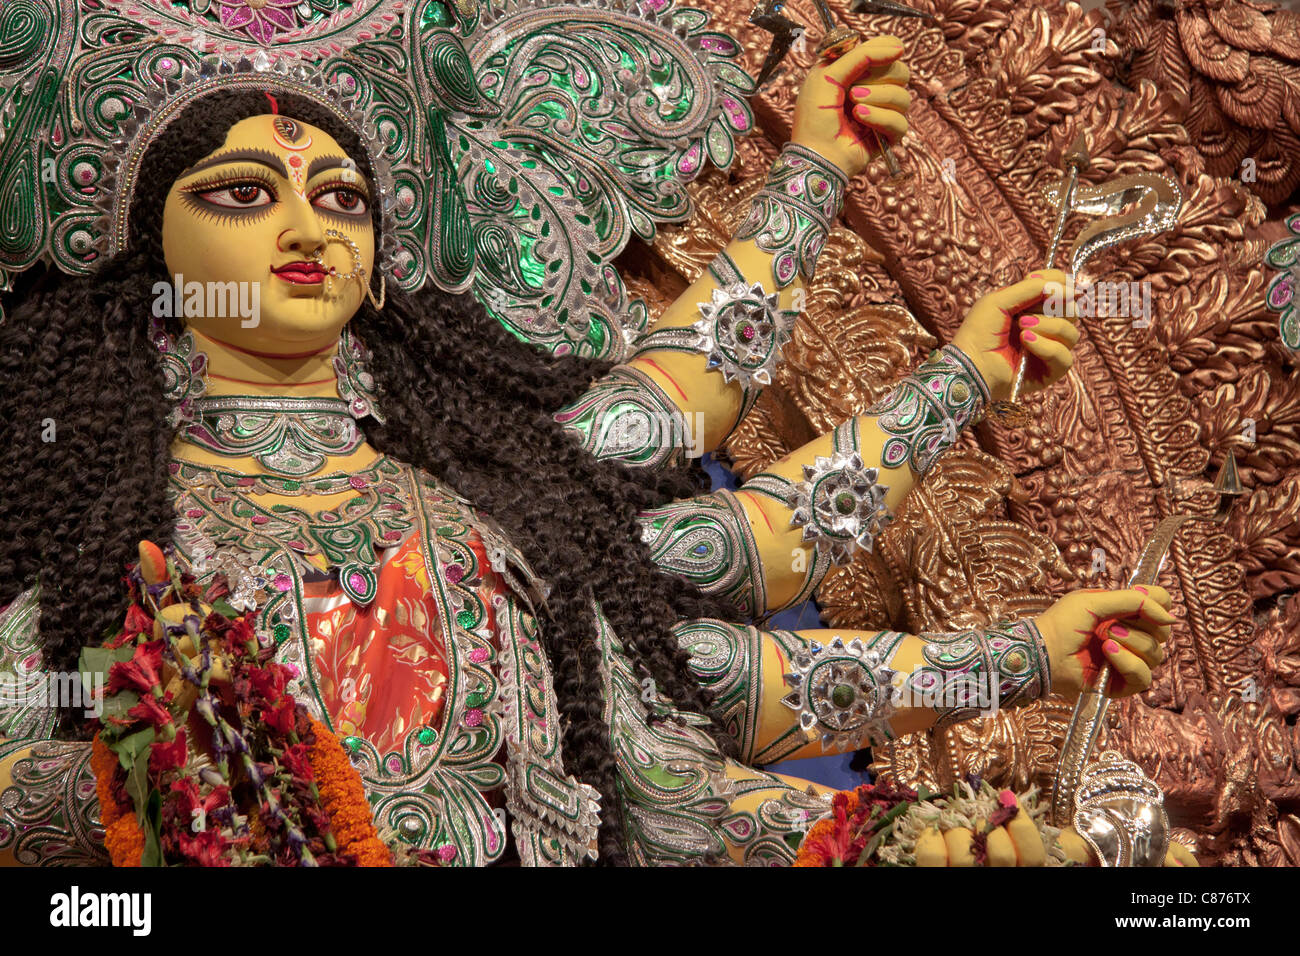 Raffigurazione della dea Durga all 'Kobiraj Bagan Durga Puja pandal' in 'Ultadanga', Kolkata (Calcutta), West Bengal, India. Foto Stock